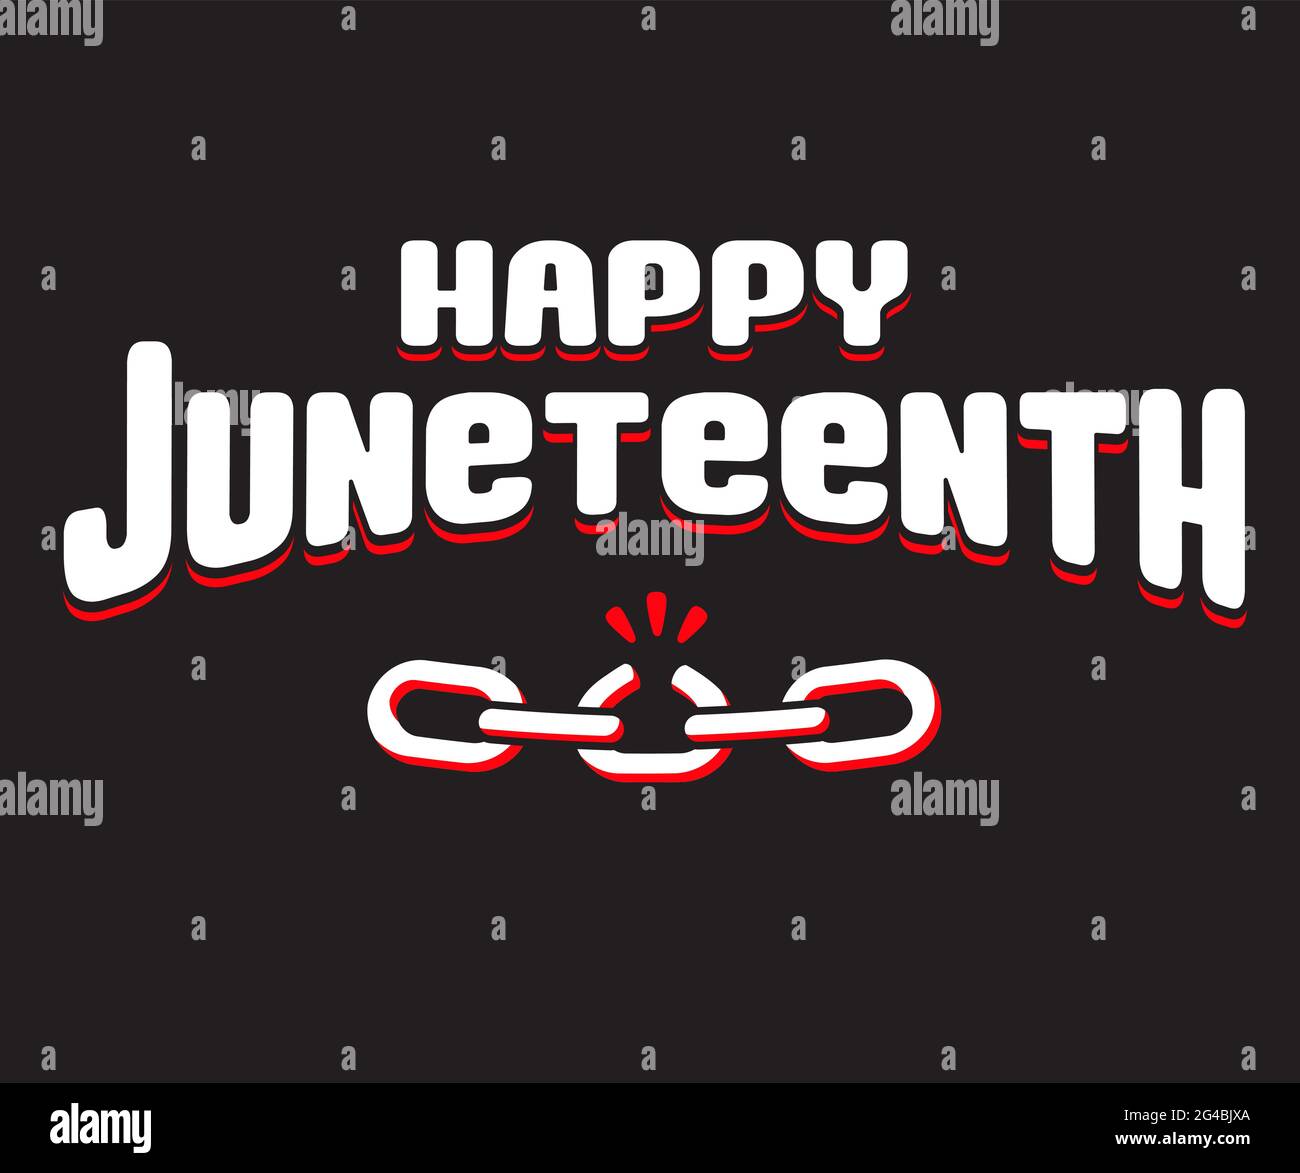 Happy Juneteenth, 19. Juni, Black Freedom Day in den Vereinigten Staaten. Typografie-Poster oder Banner mit gebrochenem Kettendesign. Vektorgrafik. Stock Vektor